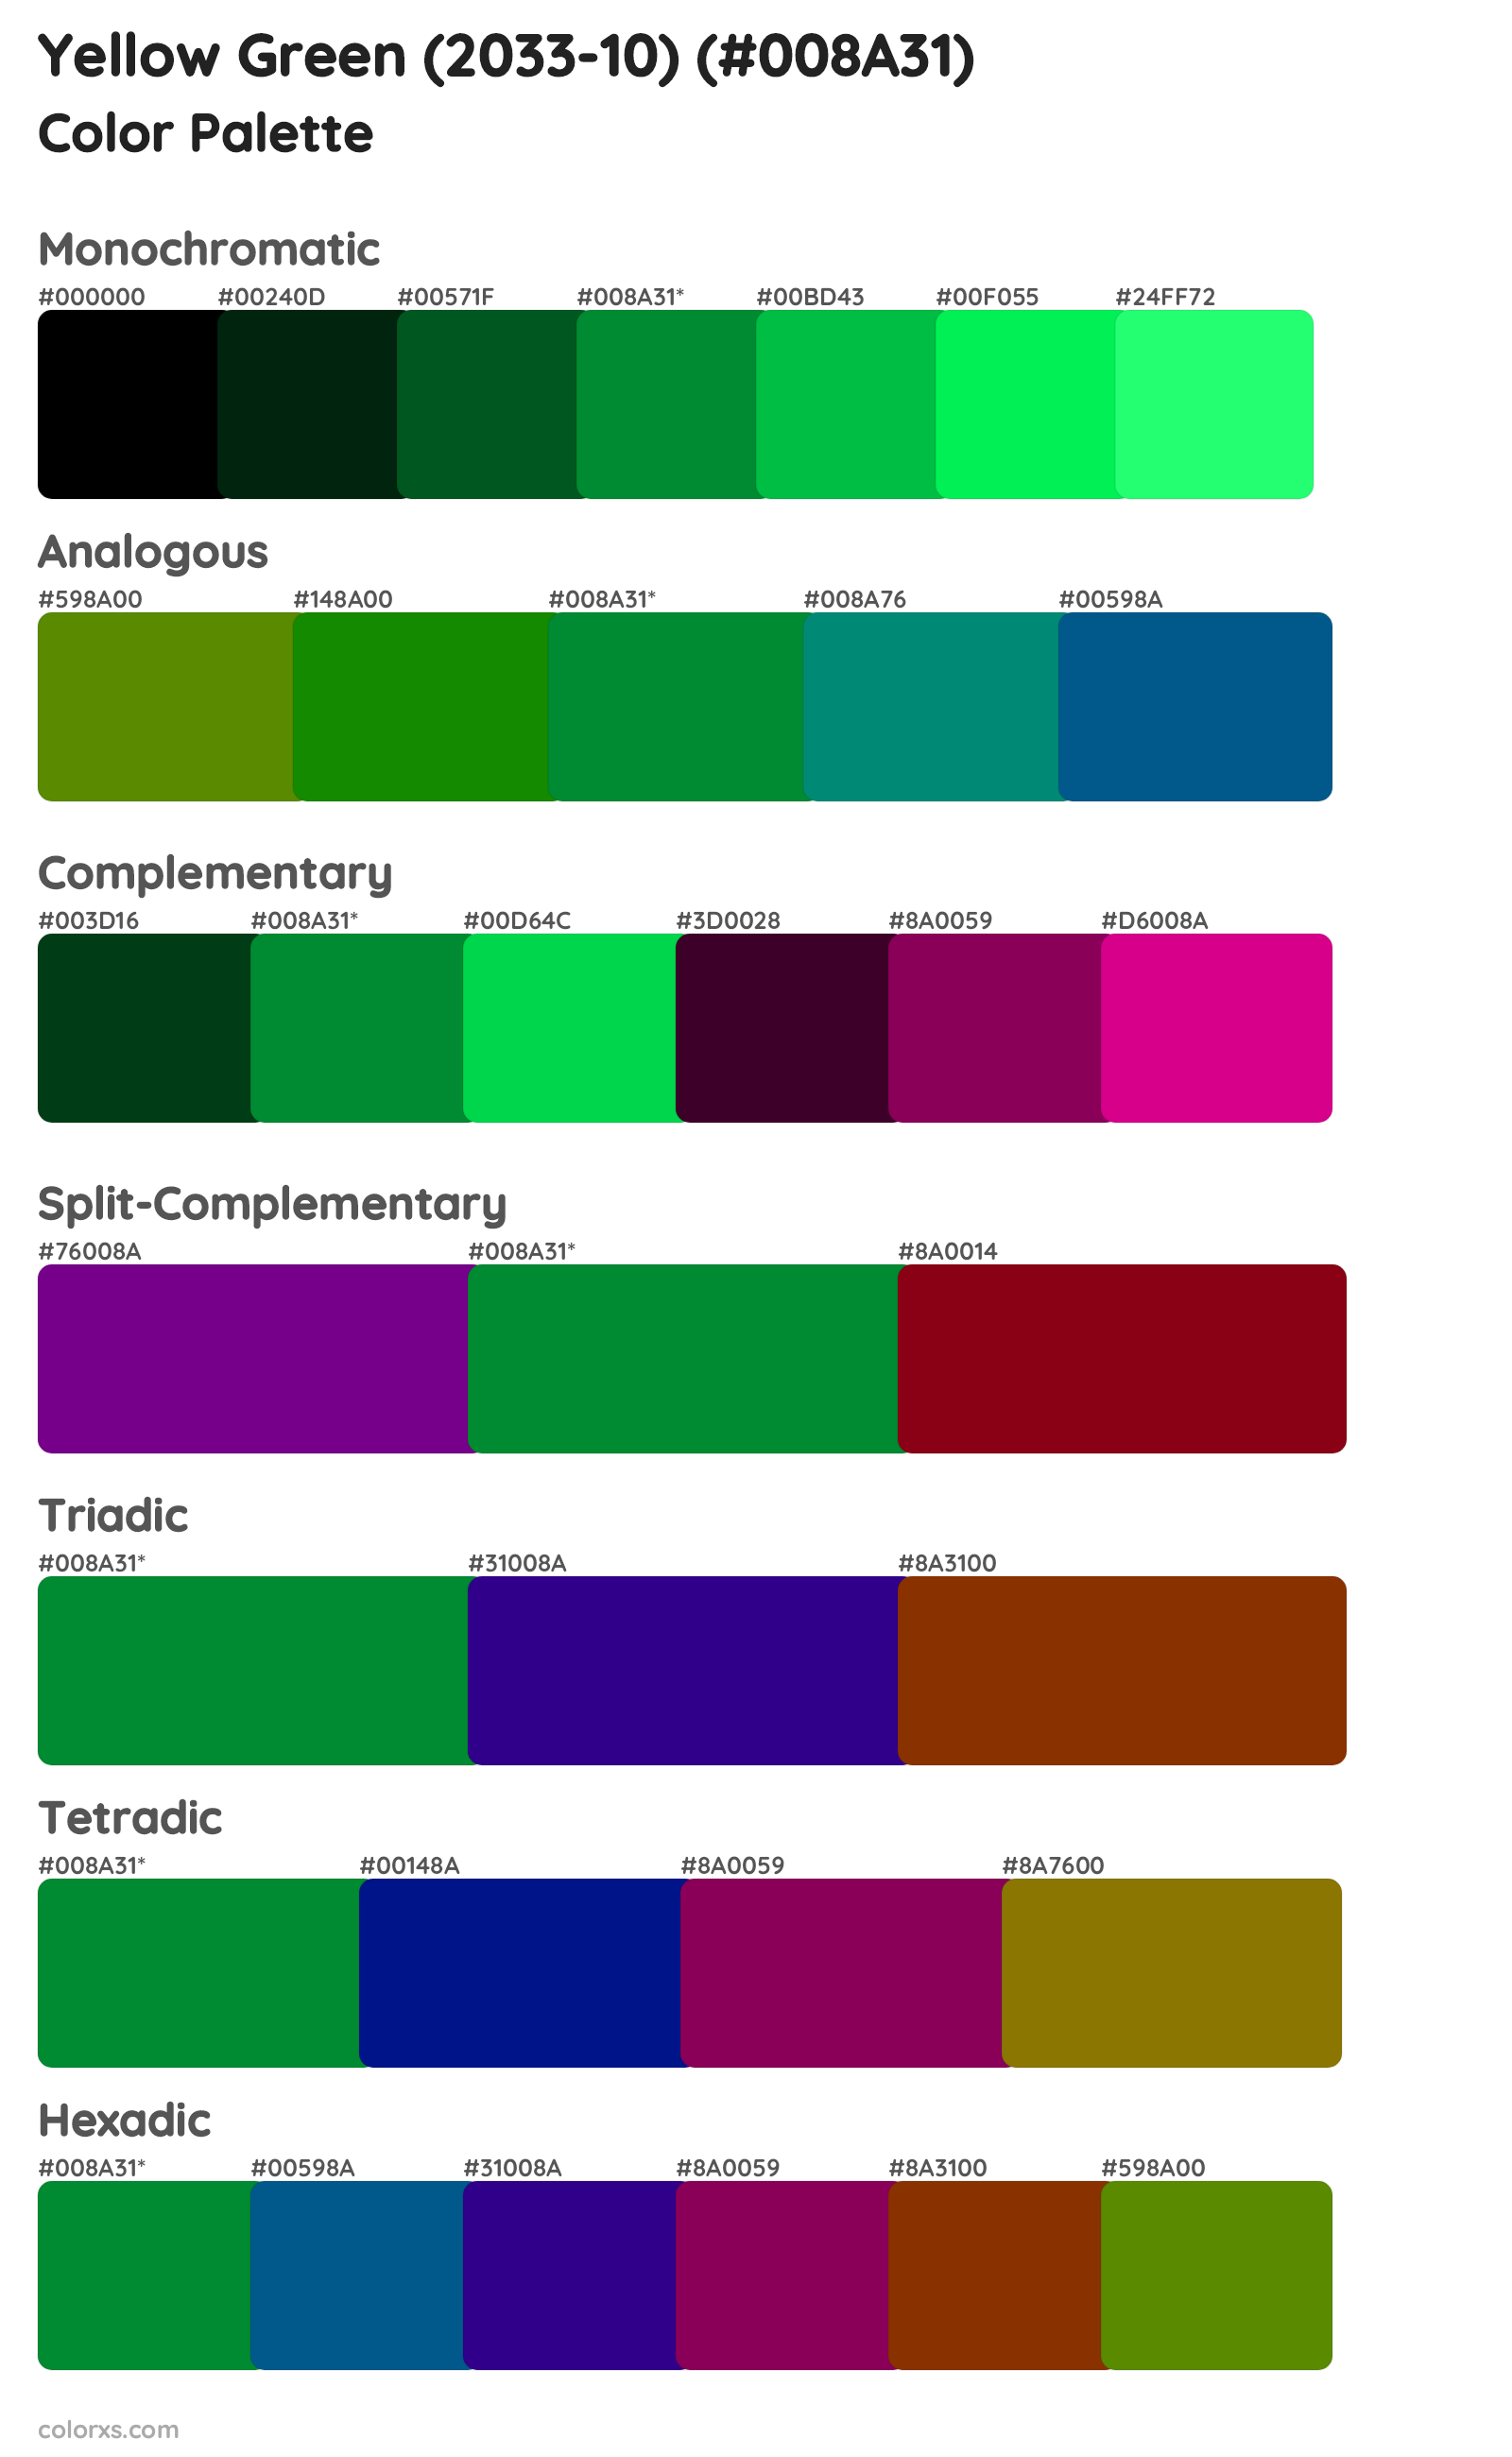 Yellow Green (2033-10) Color Scheme Palettes